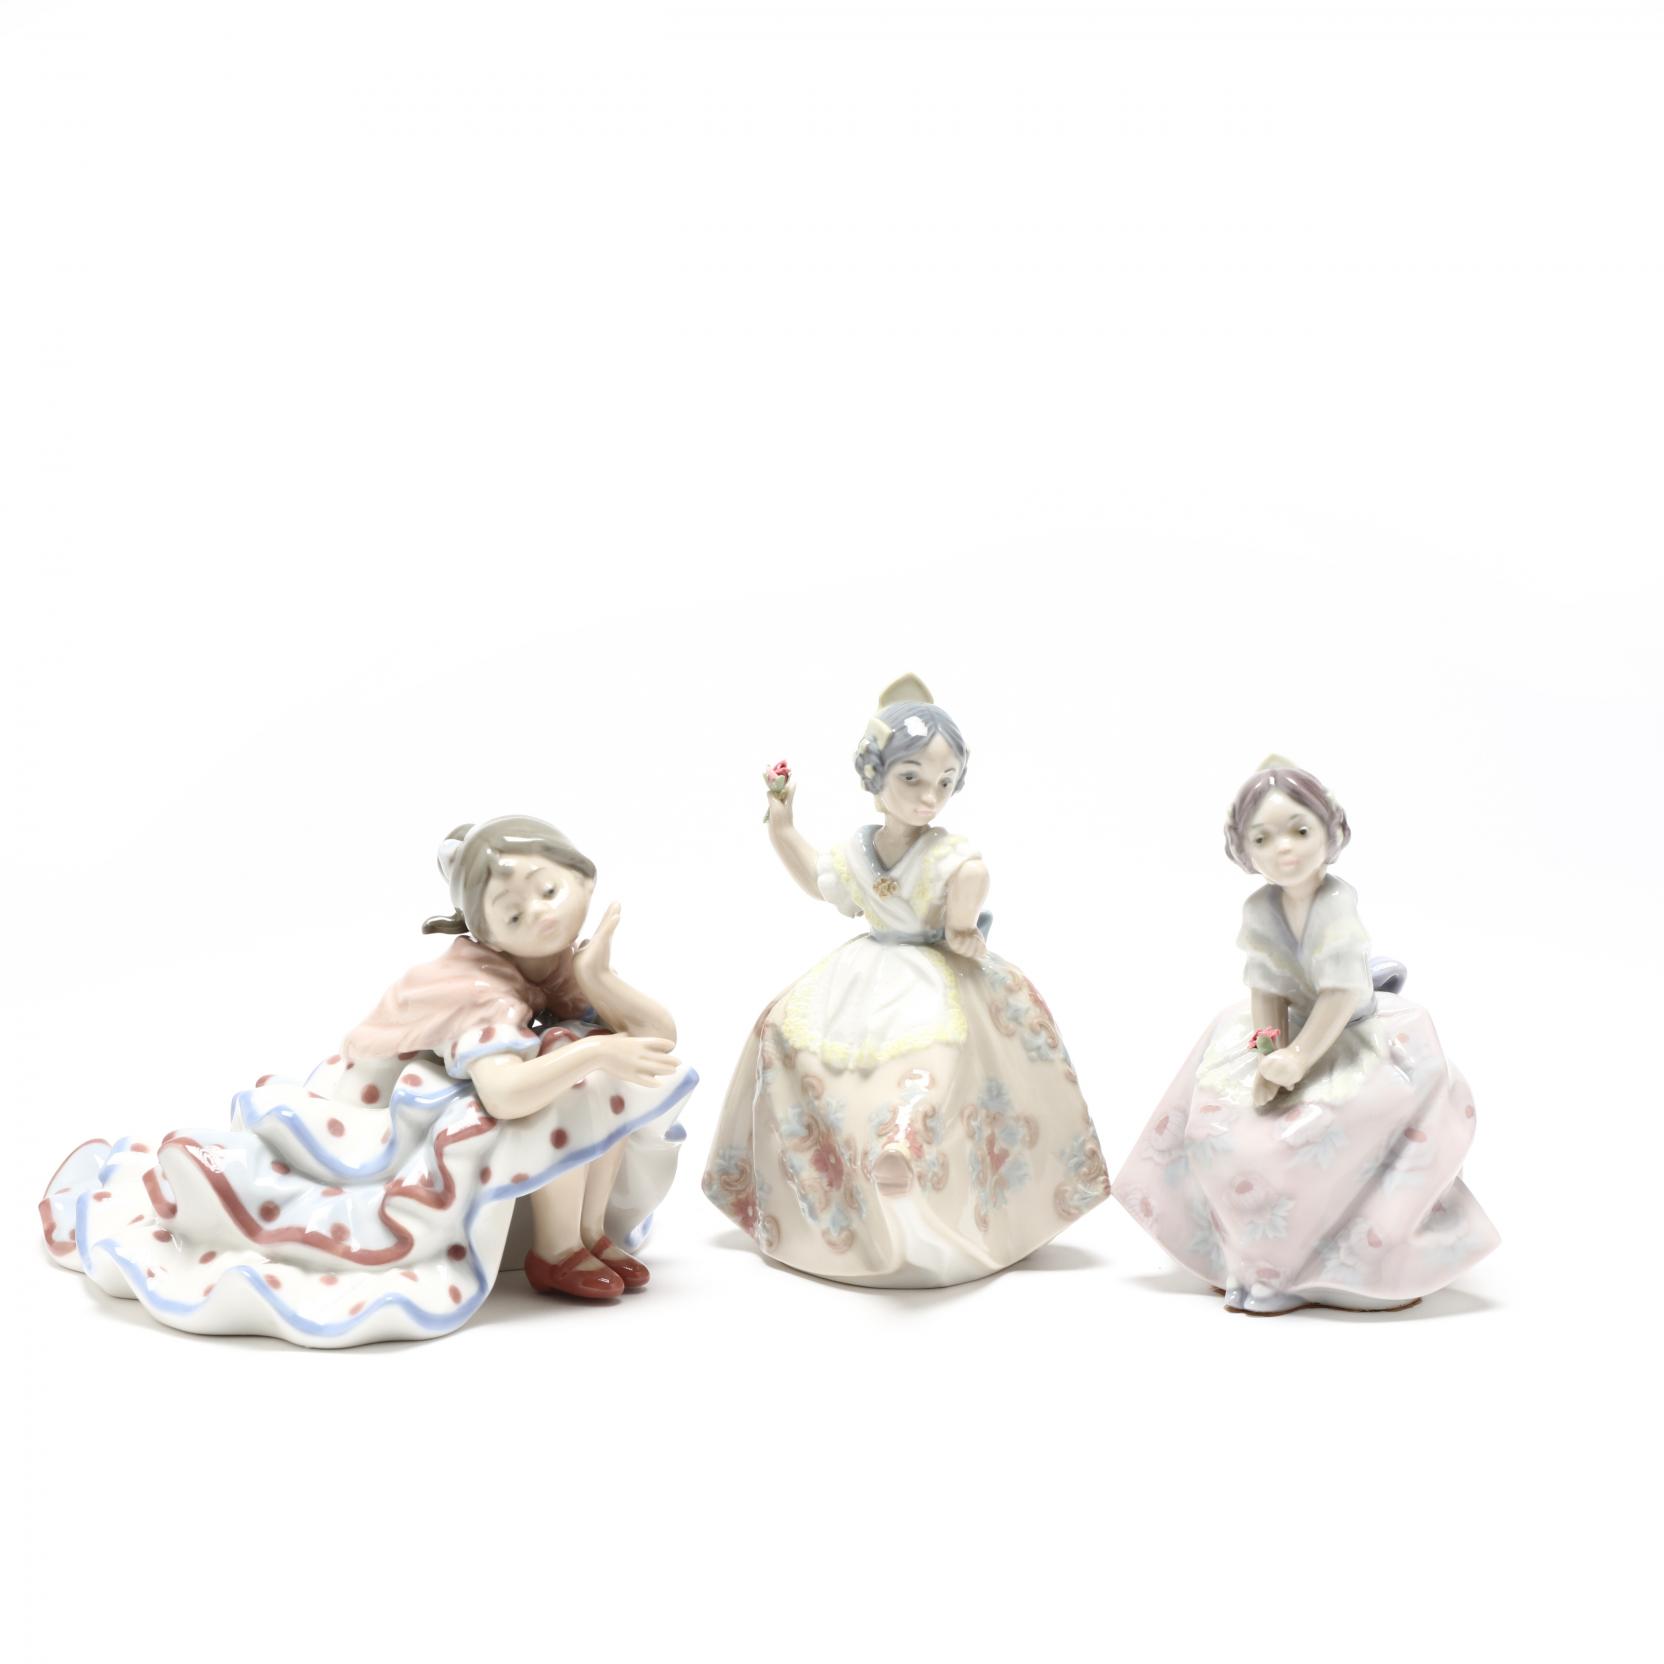 Lladró Figurines for sale in Taylortown